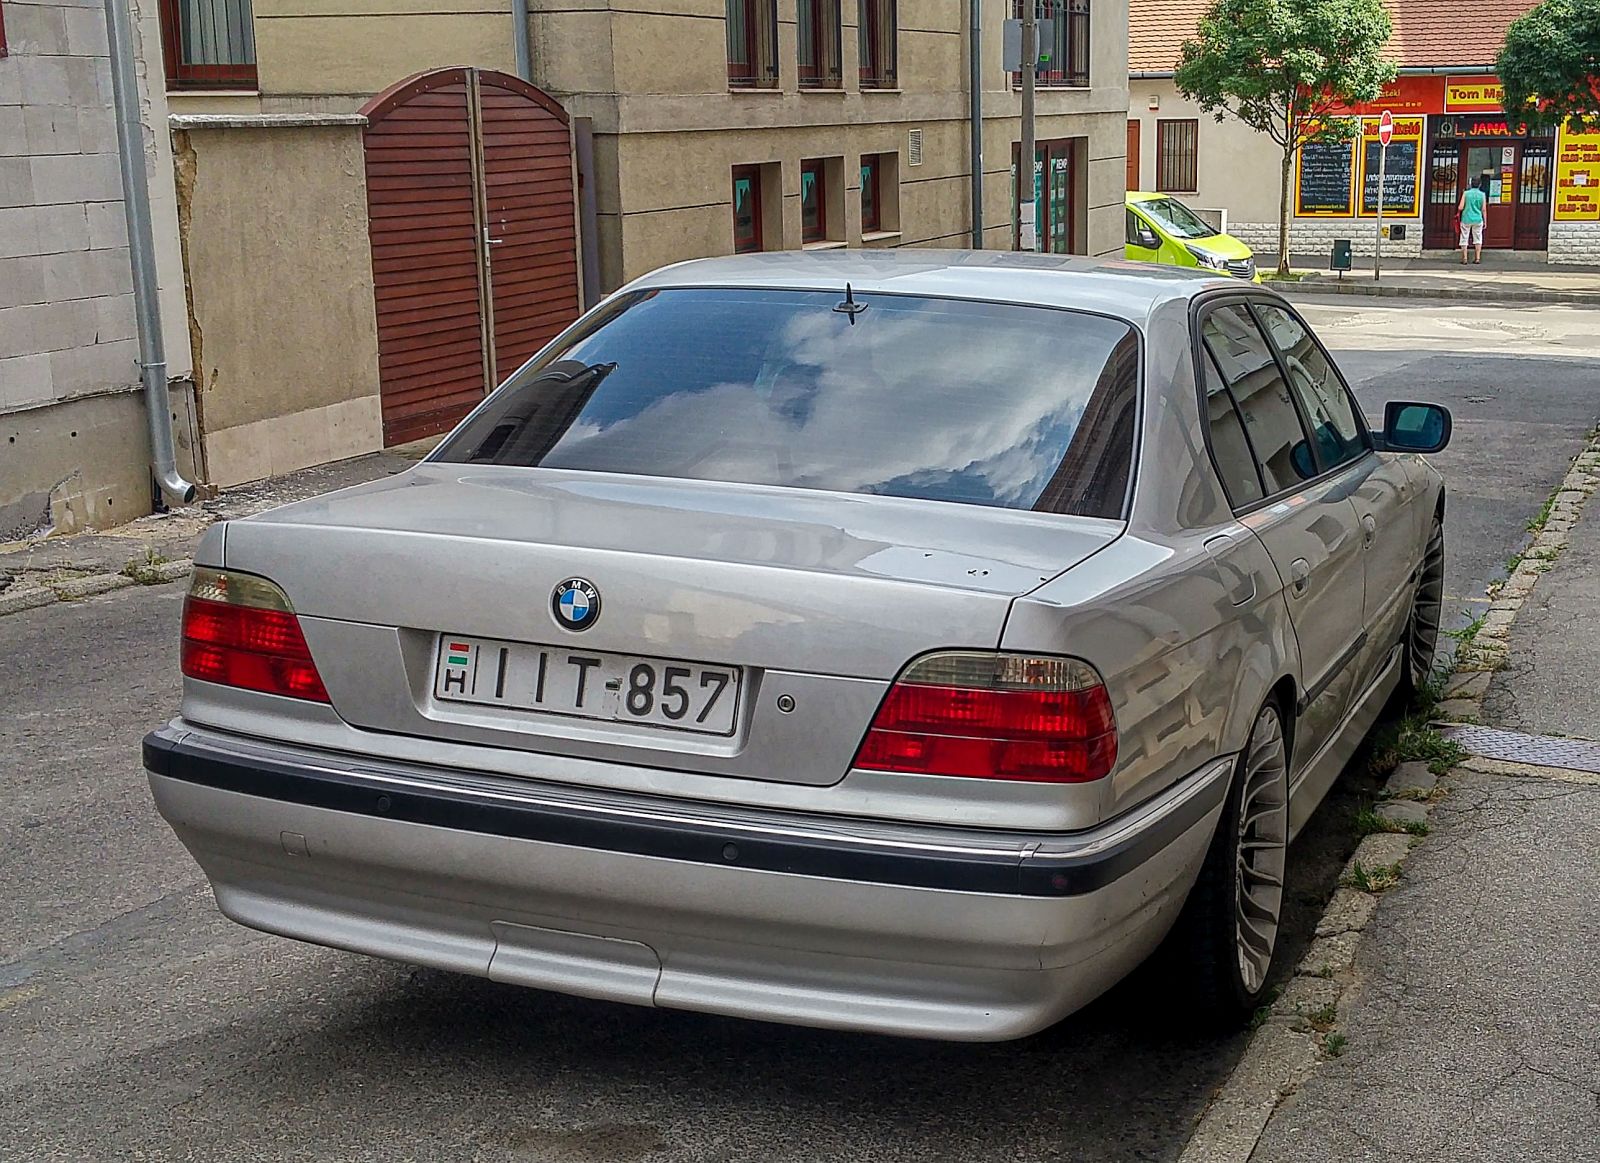 Rückansicht: BMW E38 7-er, gesehen in Juli, 2021.